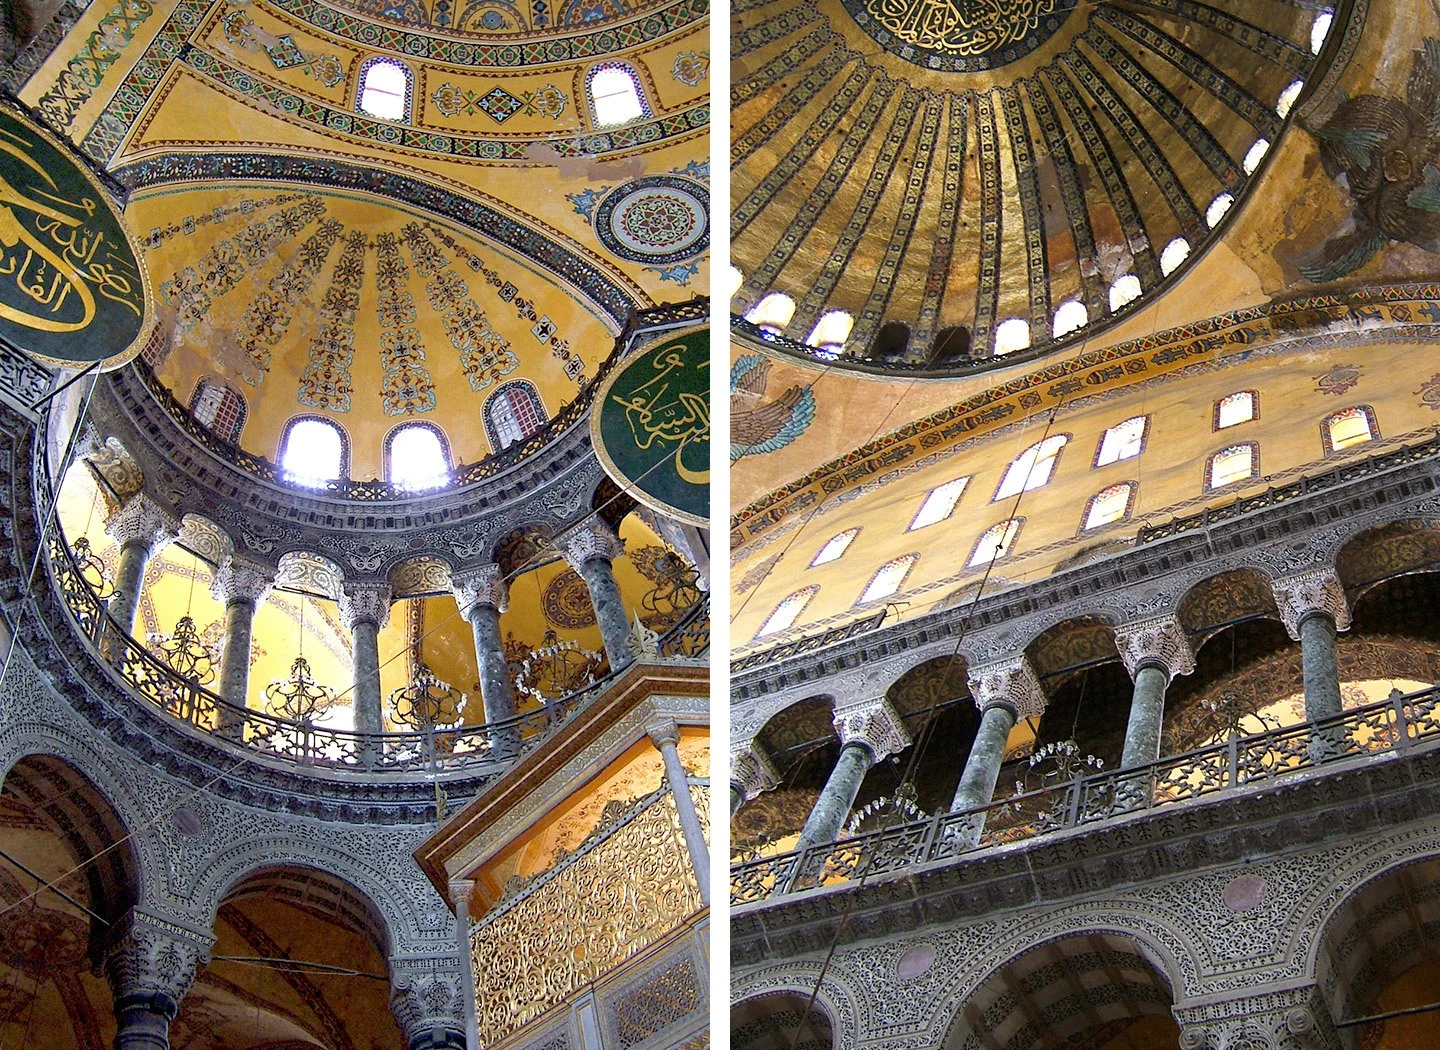 Gold decoration inside the Hagia Sophia in Istanbul